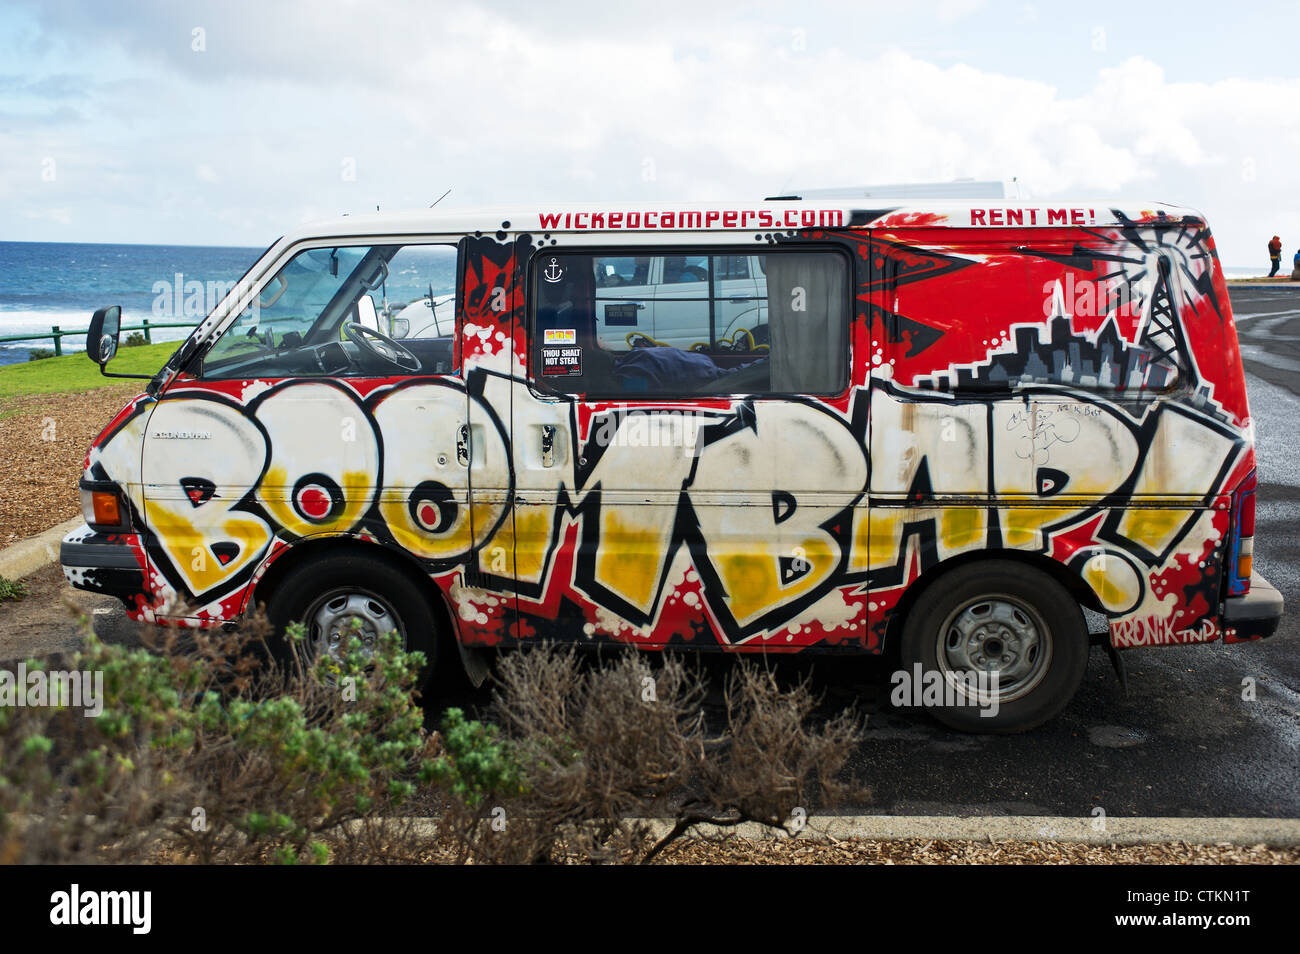 Un camping-car Volkswagen recouvert de motifs colorés Banque D'Images